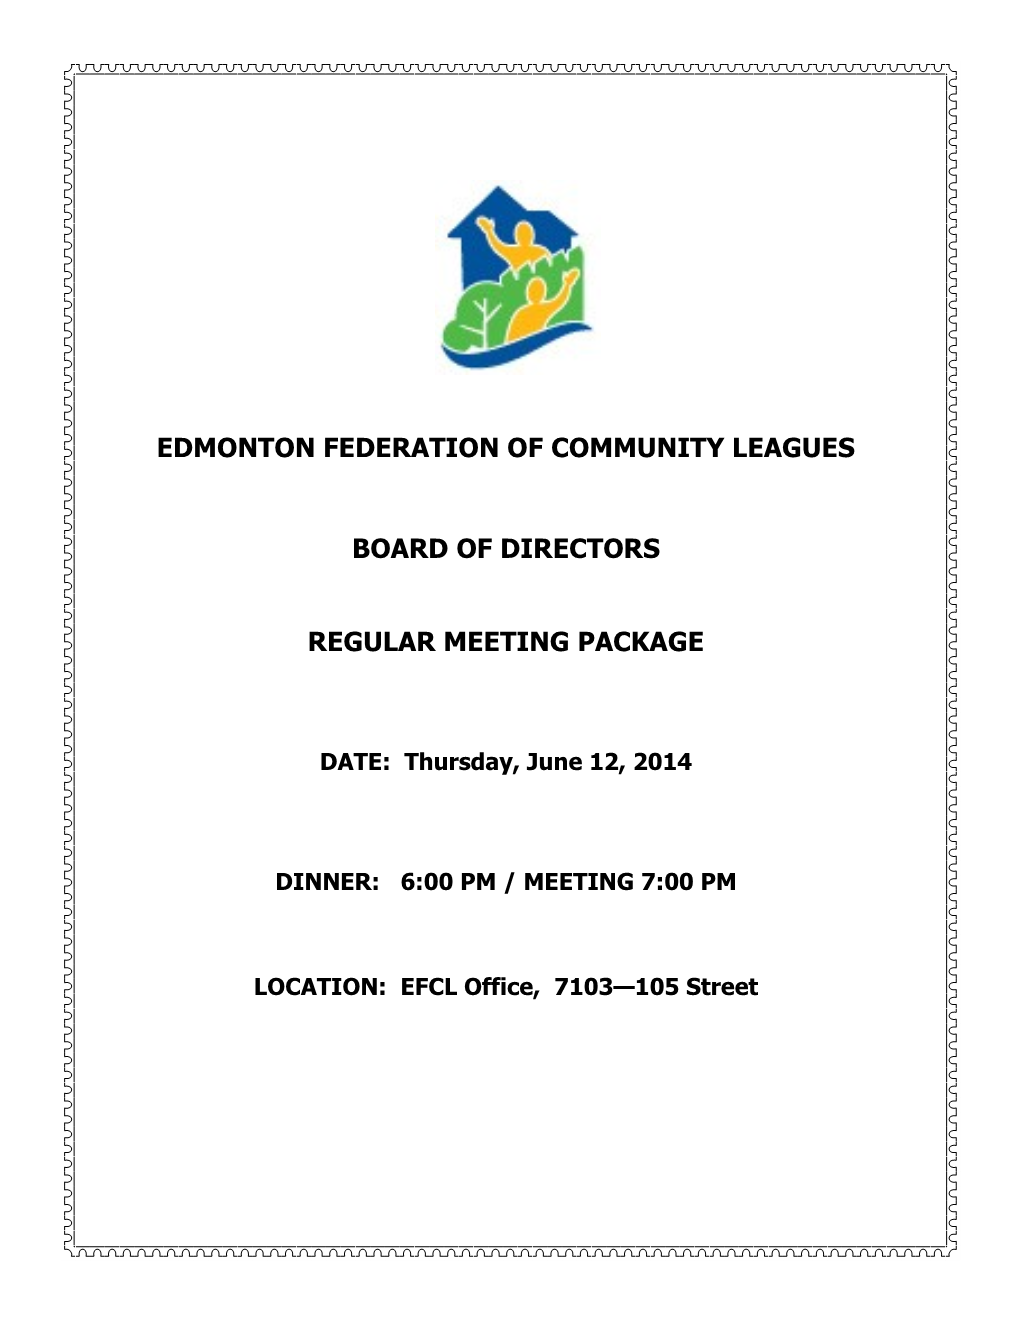 Edmonton Federation of Community Leagues Board